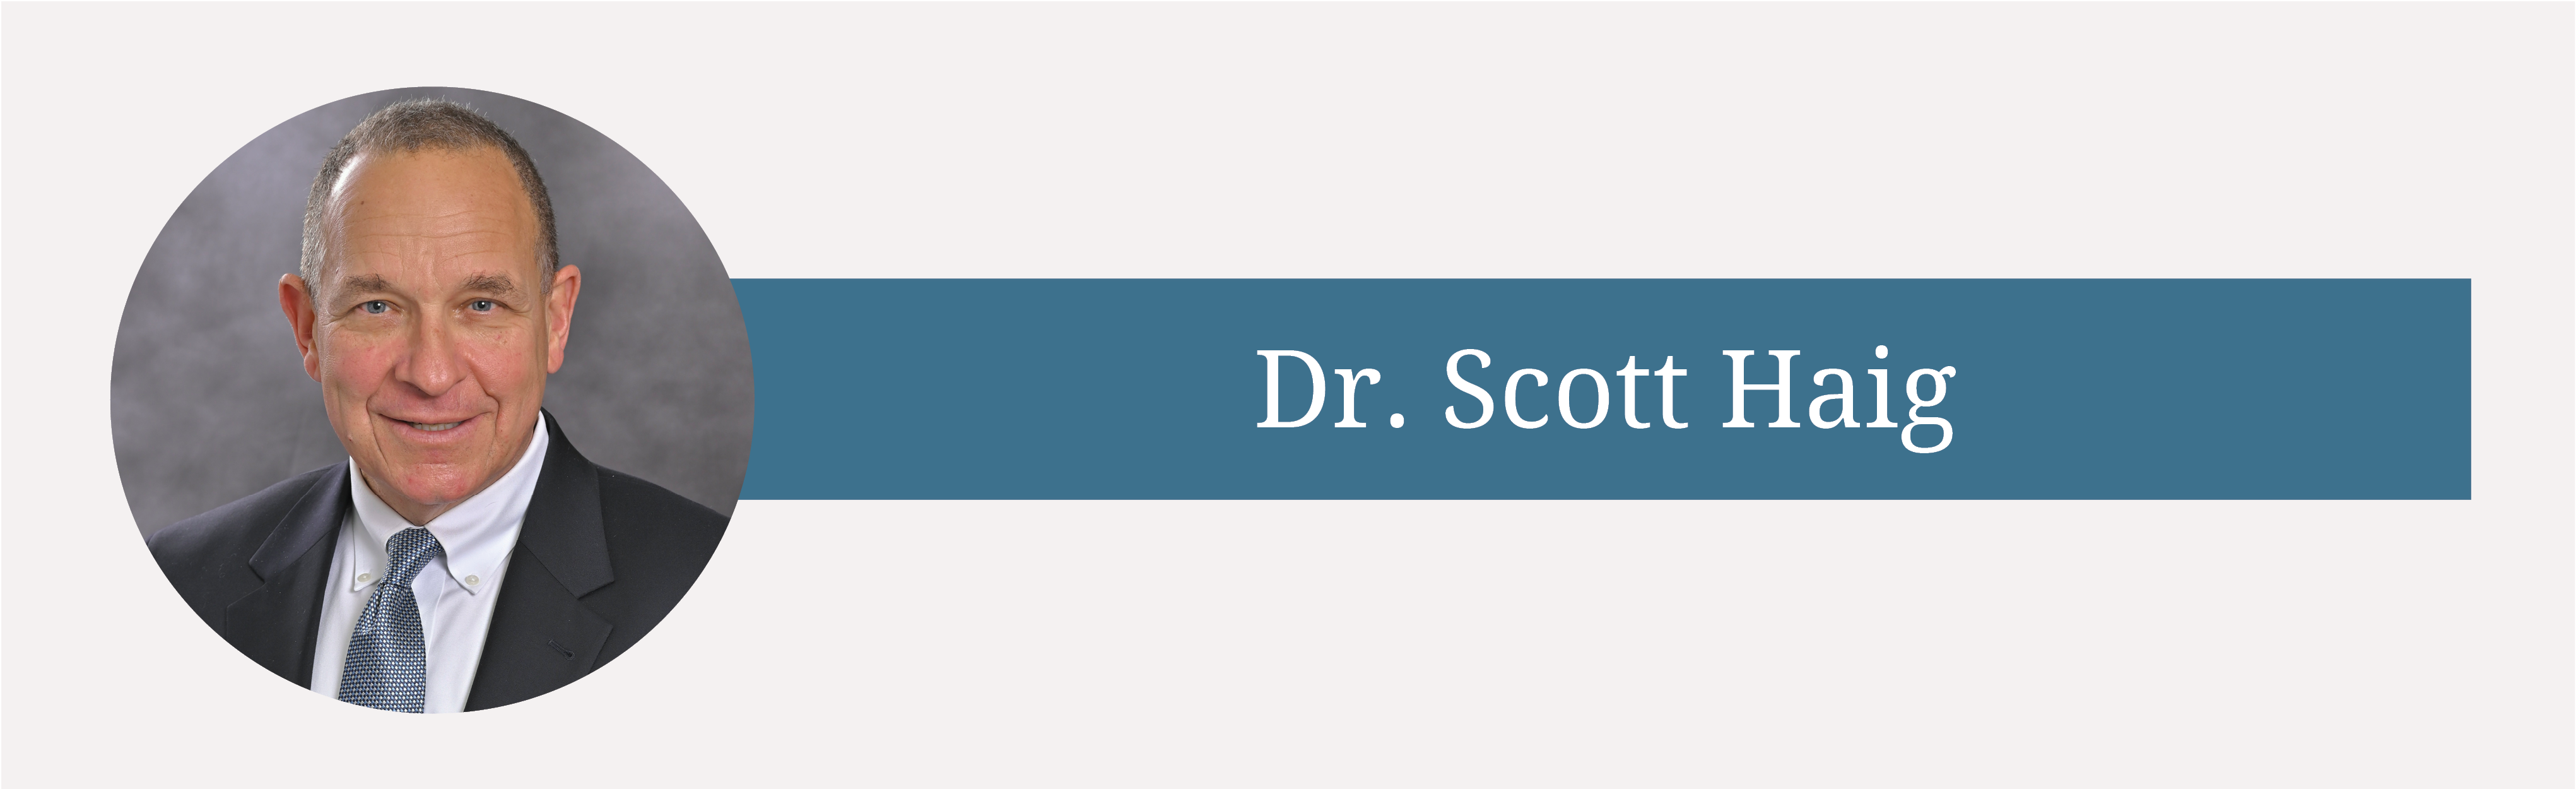 Orthopedic Surgeon Dr. Scott Haig Joins WPHPA Southern Westchester Orthopedics